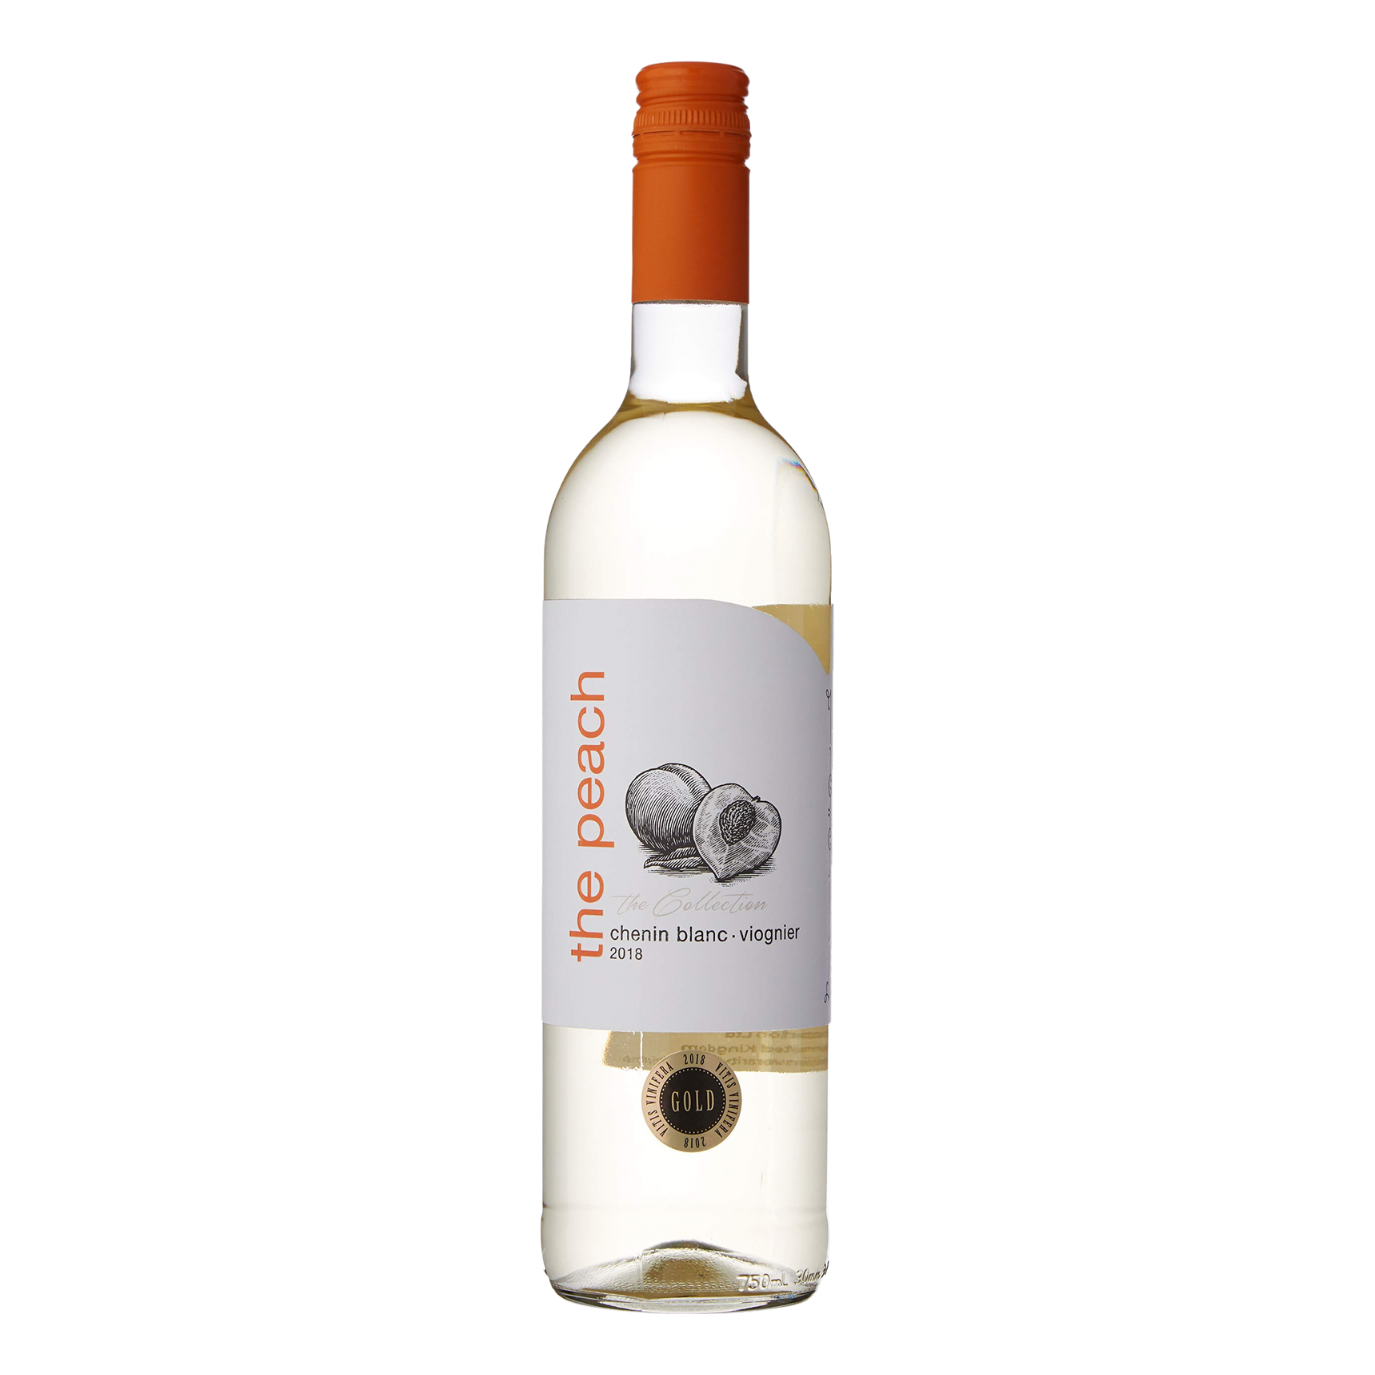 Mooiplaas The Collection The Peach Chenin Blanc Viognier 2018